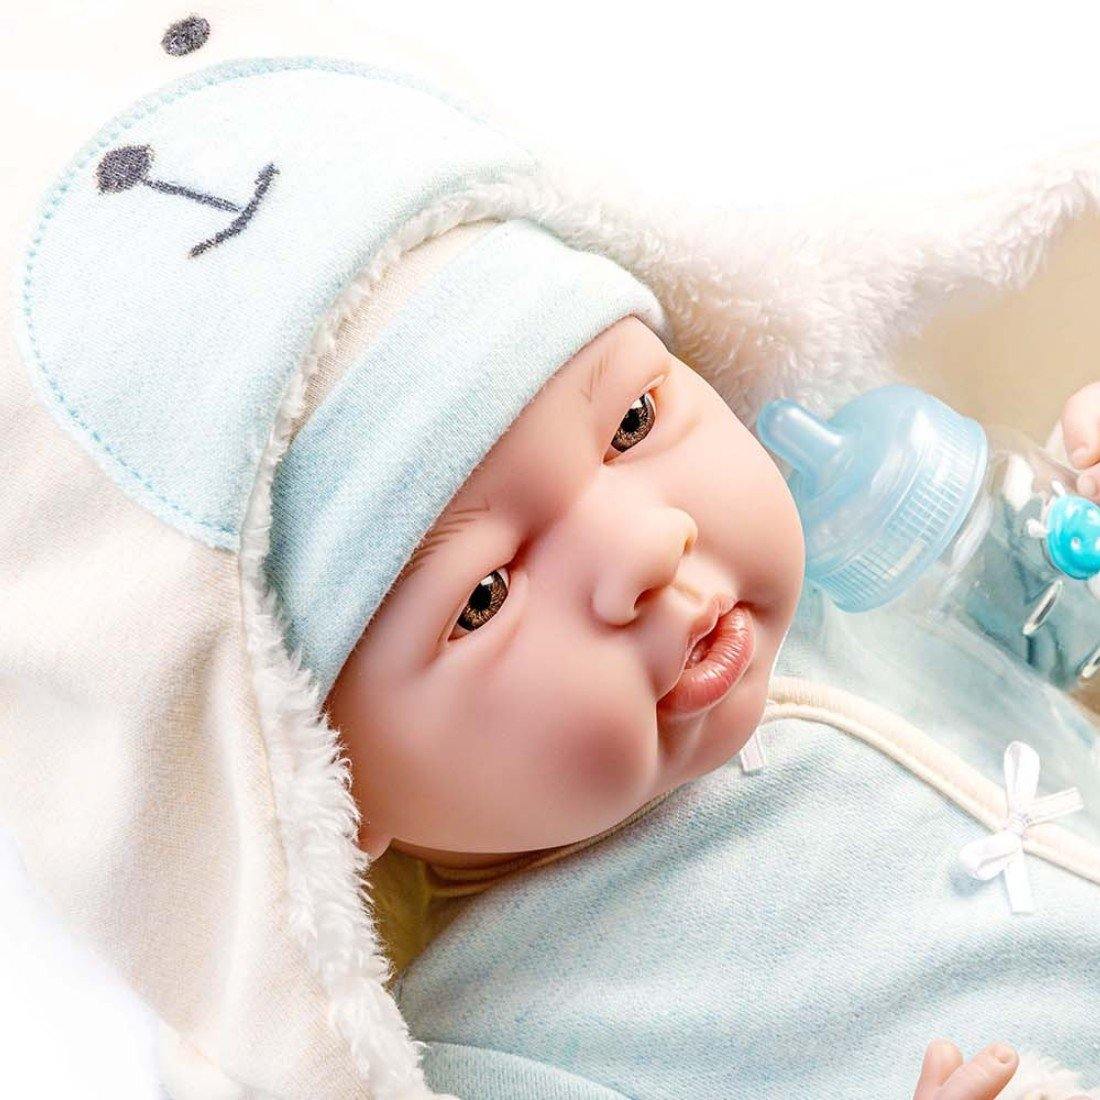 JC Toys, Soft Body La Newborn 15.5 inches baby doll - Blue Bear Bunting Gift Set - JC Toys Group Inc.